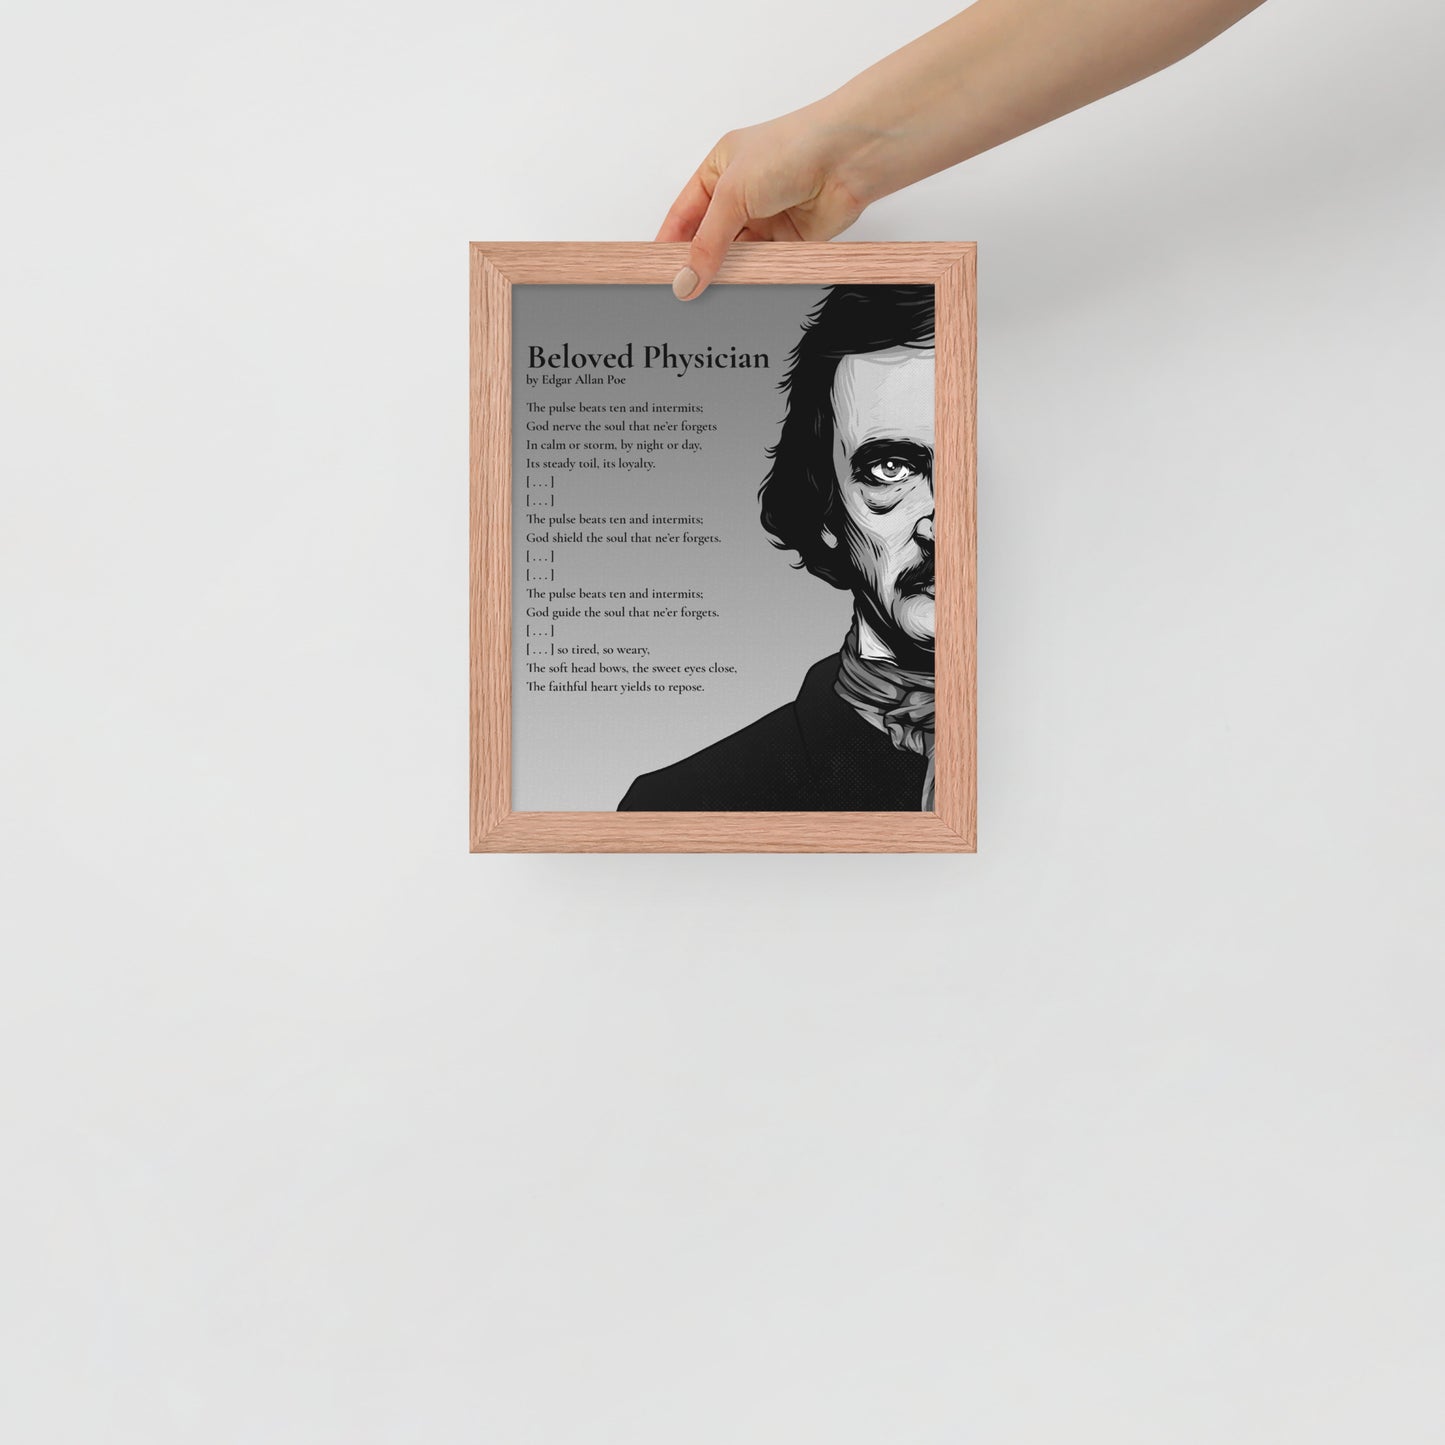 Edgar Allan Poe's 'Beloved Physician' Framed Matted Poster - 8 x 10 Red Oak Frame